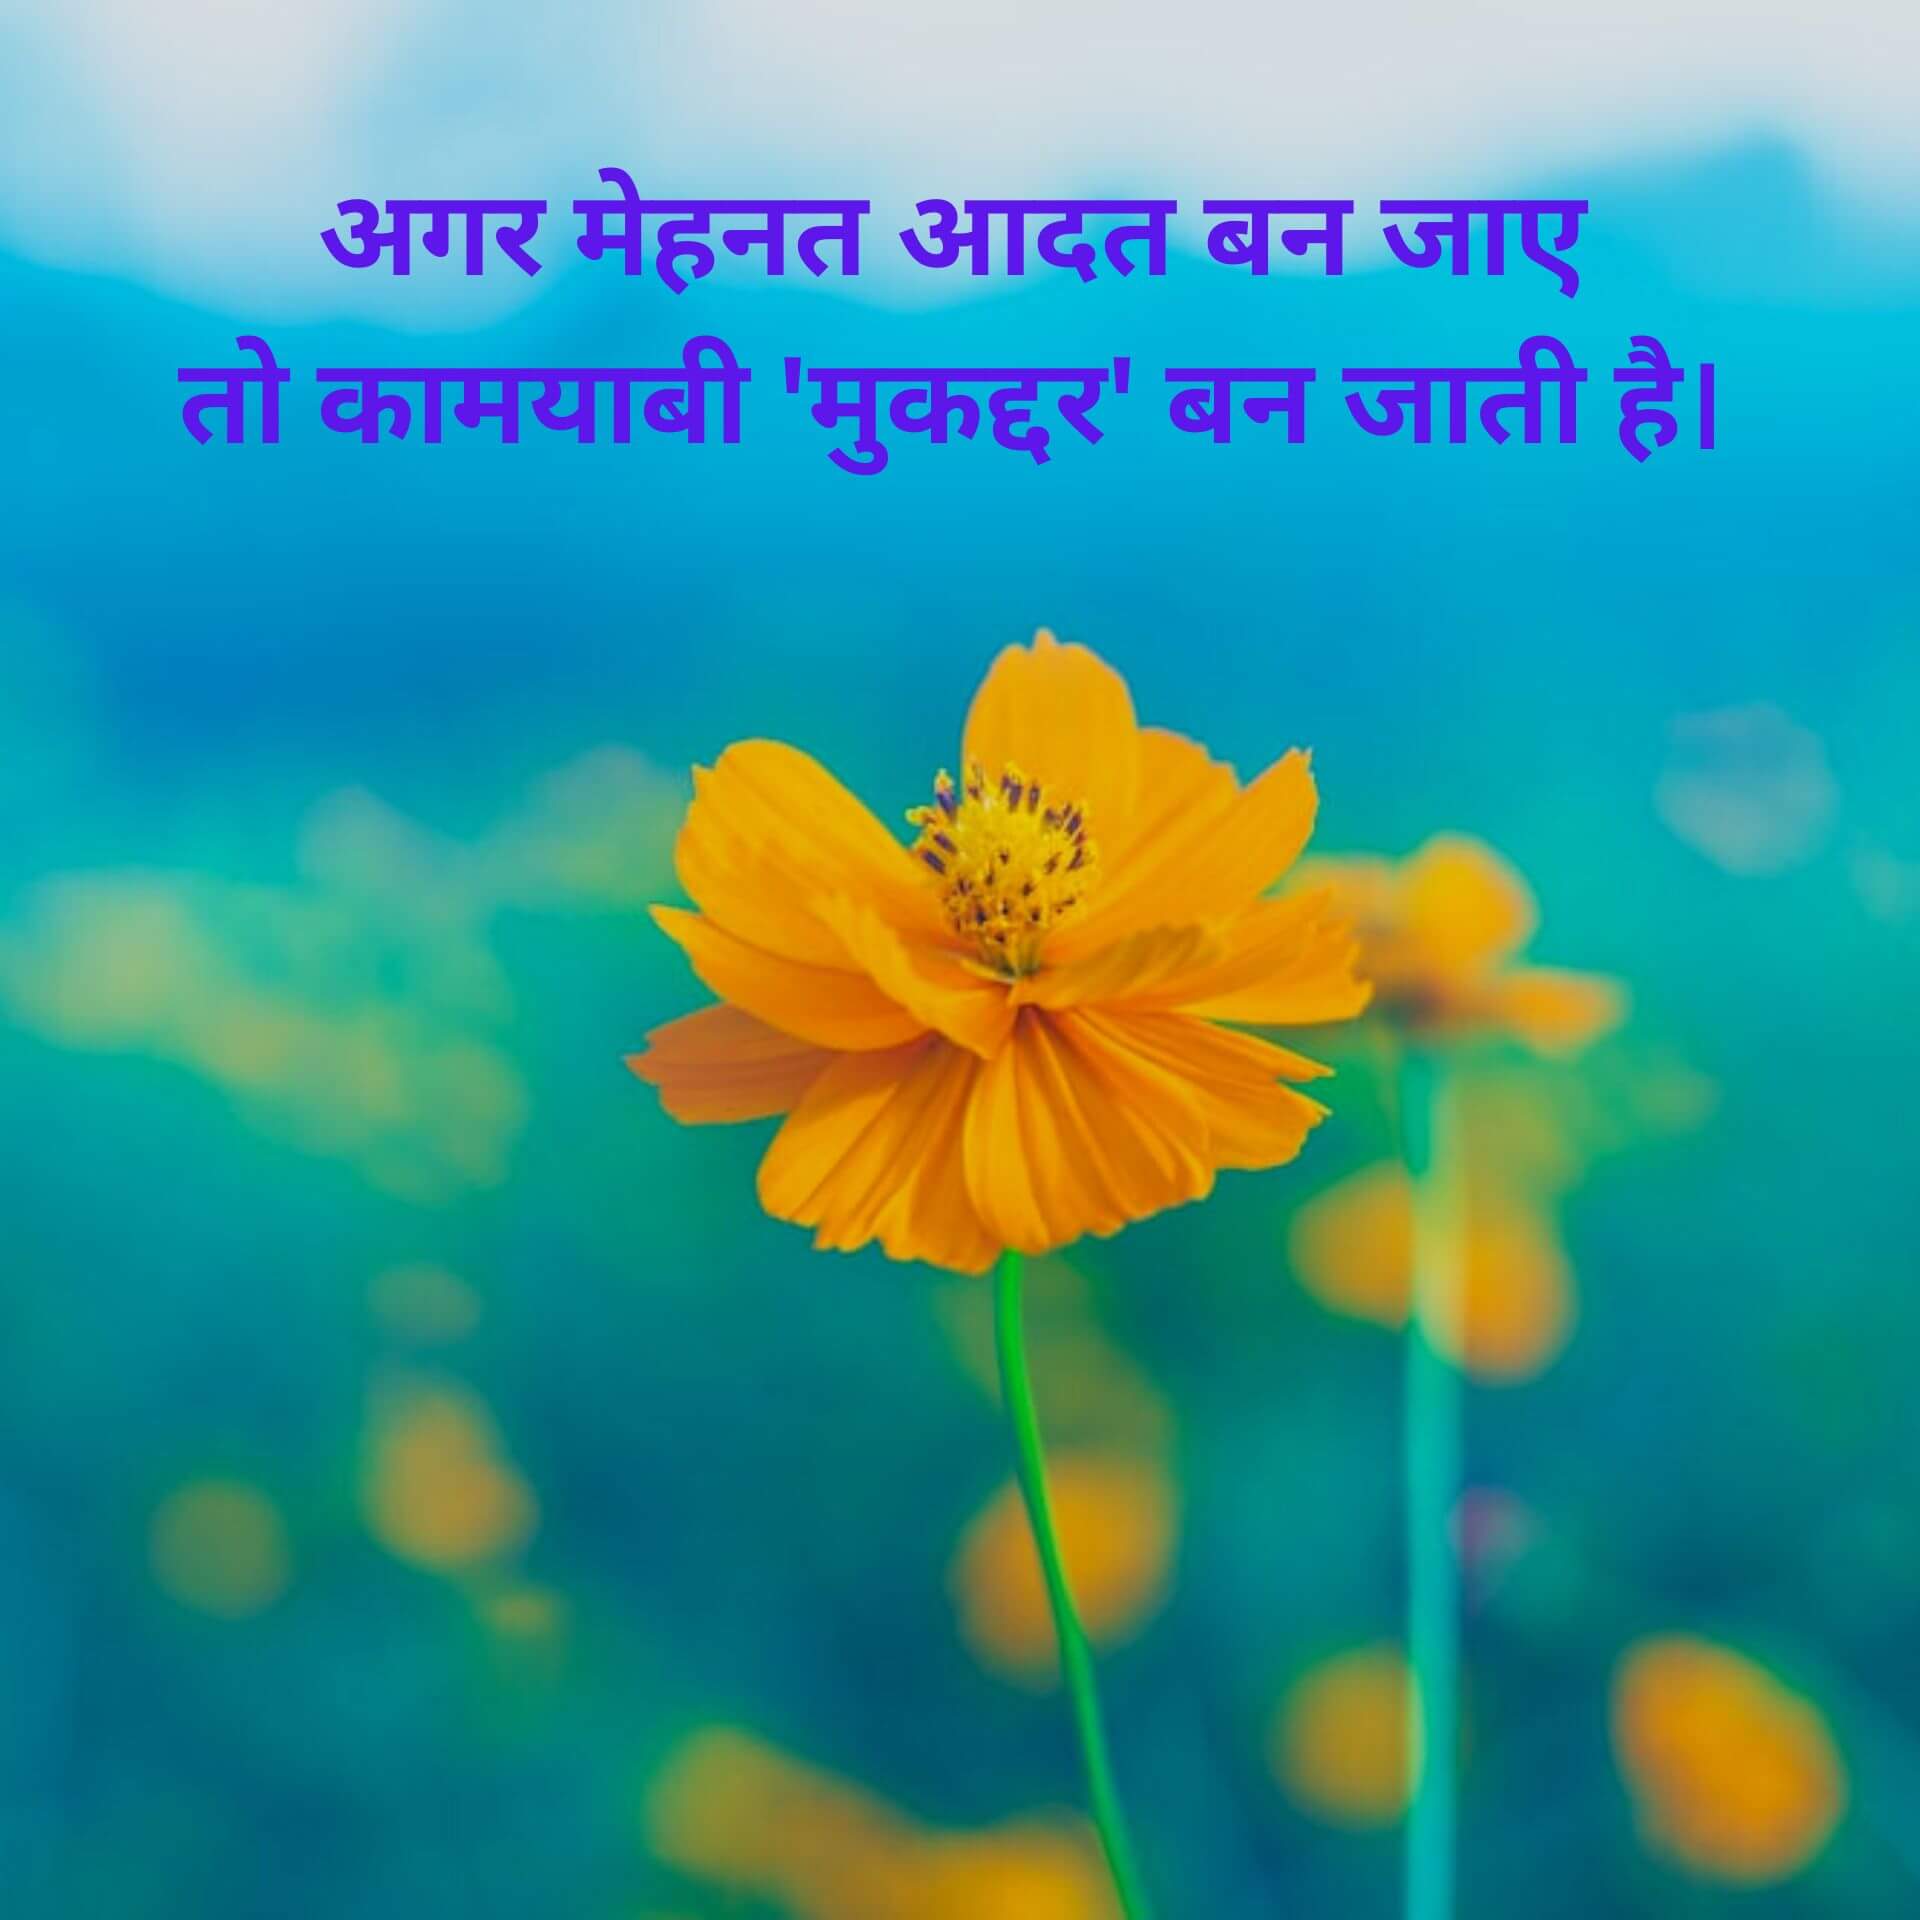 Hindi Motivational Quotes photo Download 2